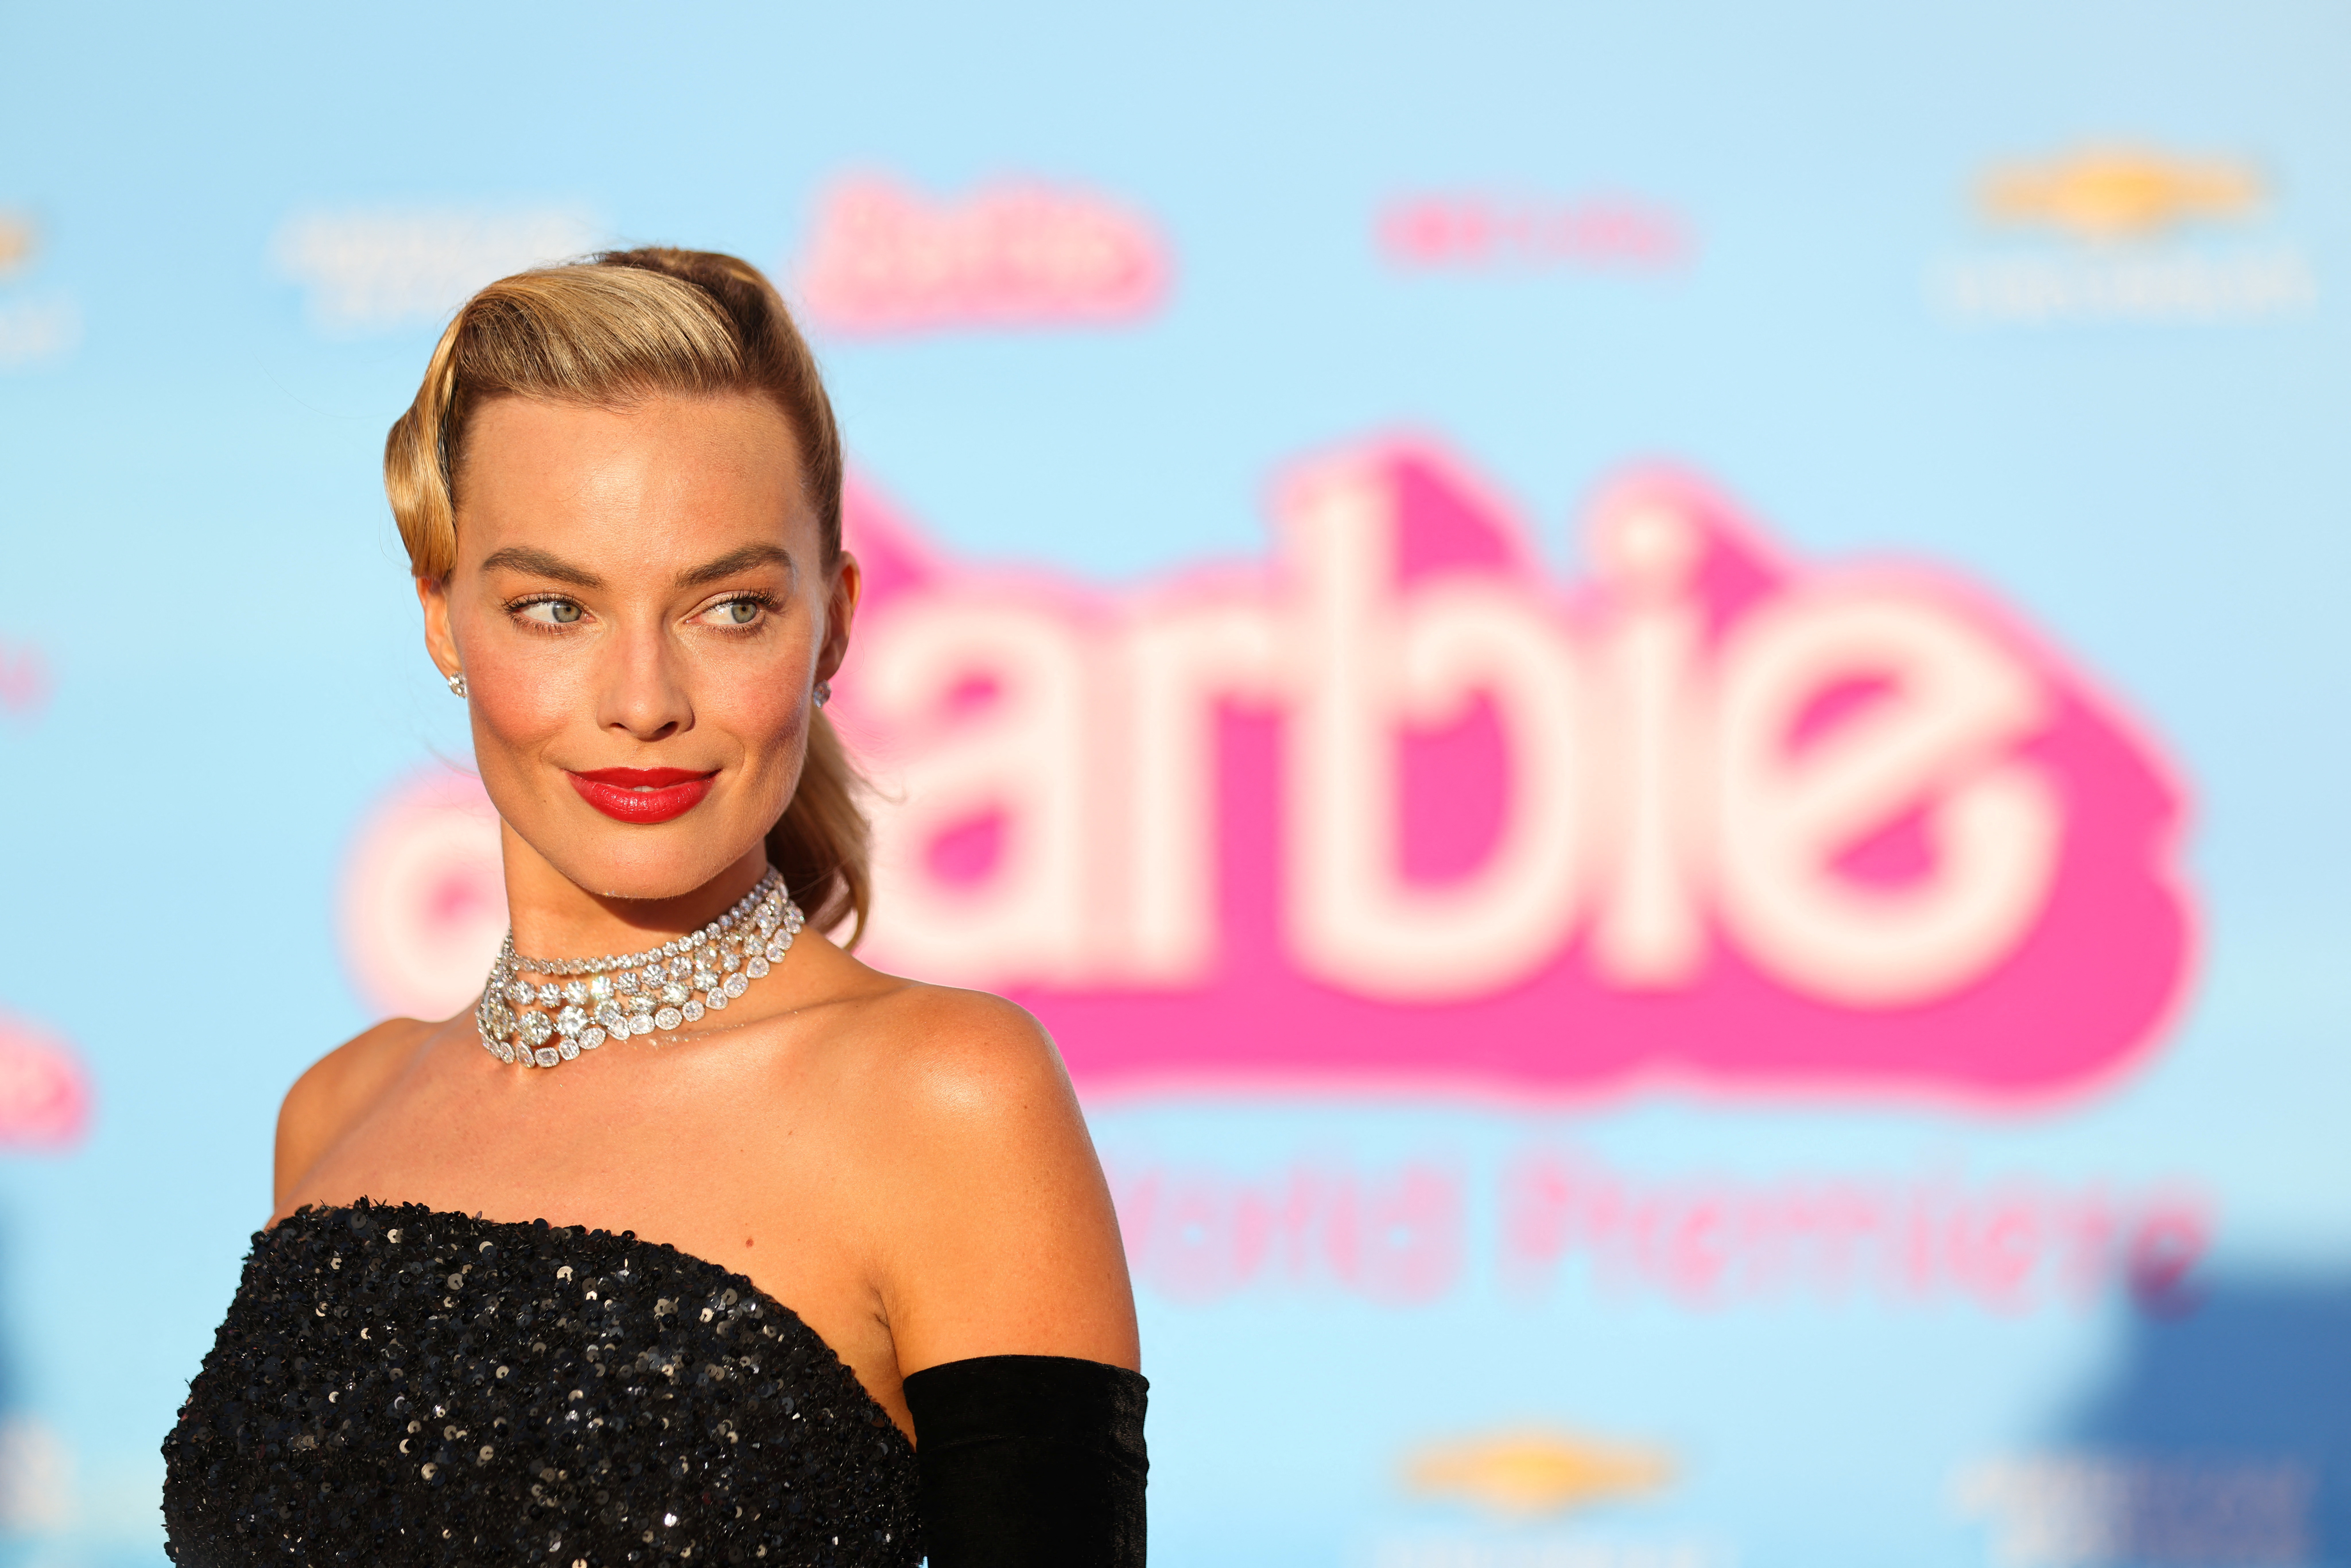 Barbie Movie: What We Know About Margot Robbie and Greta Gerwig Film